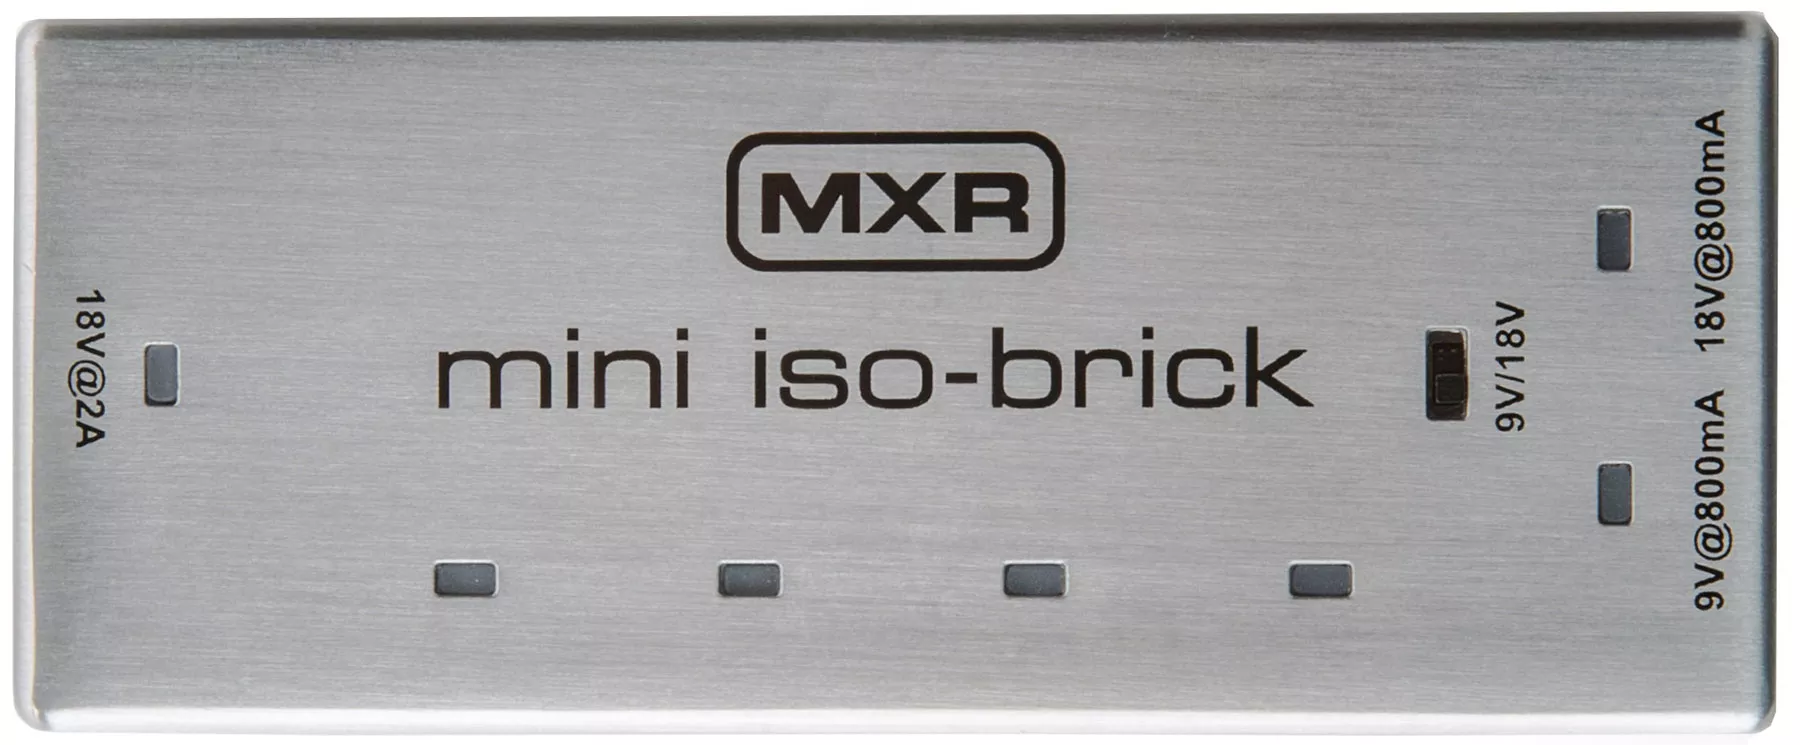 Mxr Mini Iso-Brick Power Supply M239 Power supply